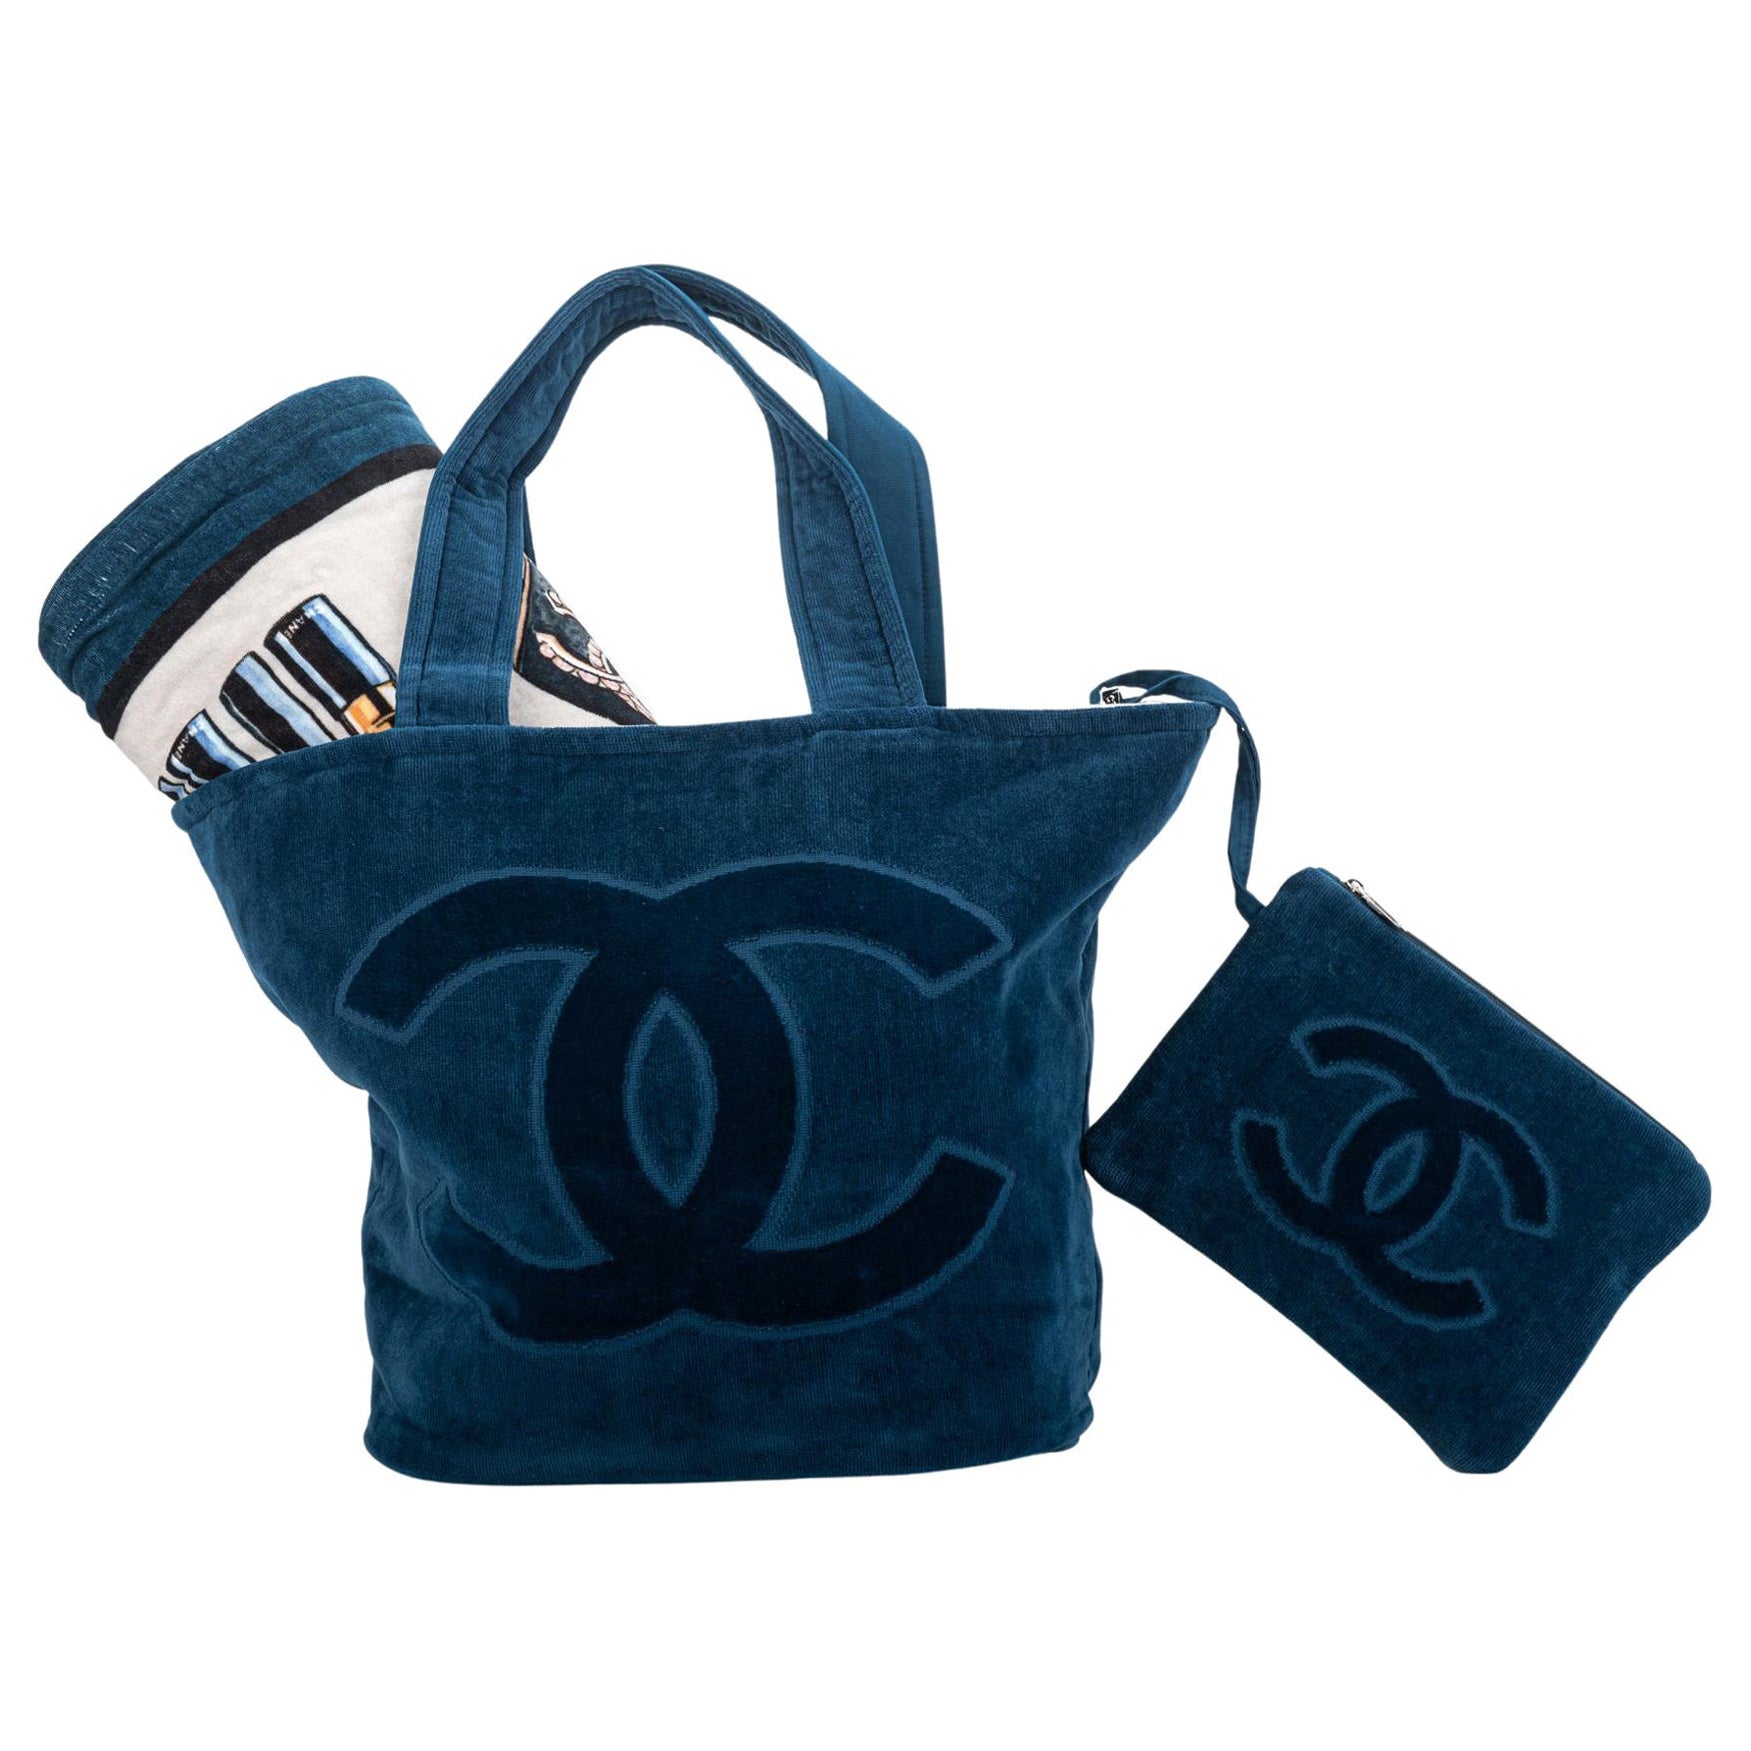 Chanel Beach Bag Towel - 12 For Sale on 1stDibs